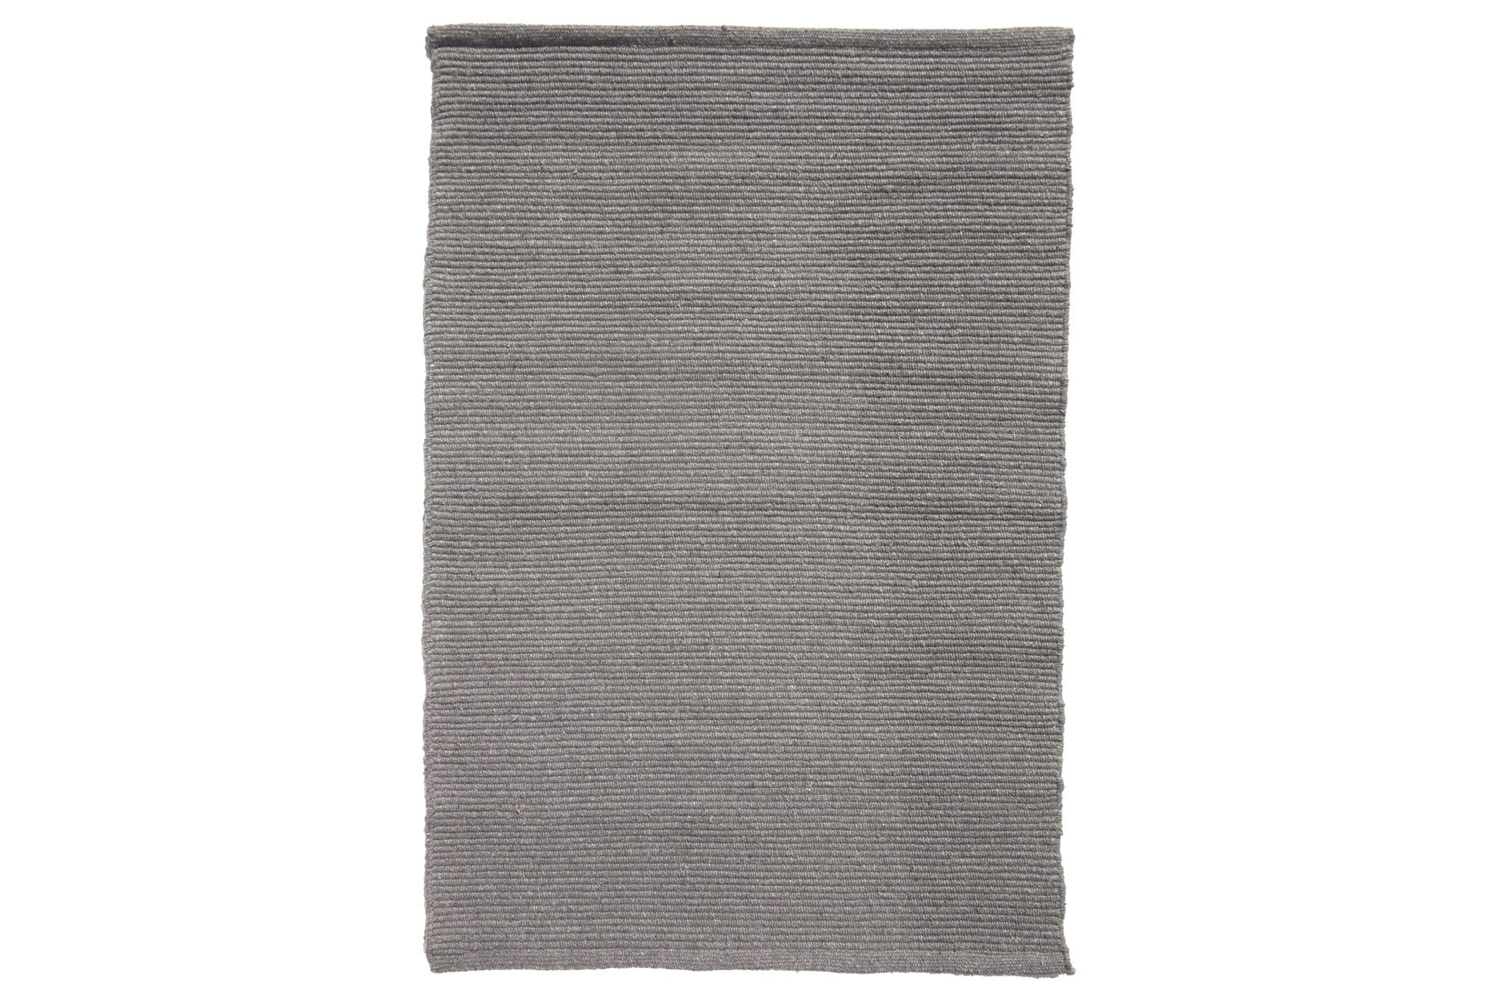 the hook & loom solid medium grey flatweave eco cotton rug starts at \$\2\2 18